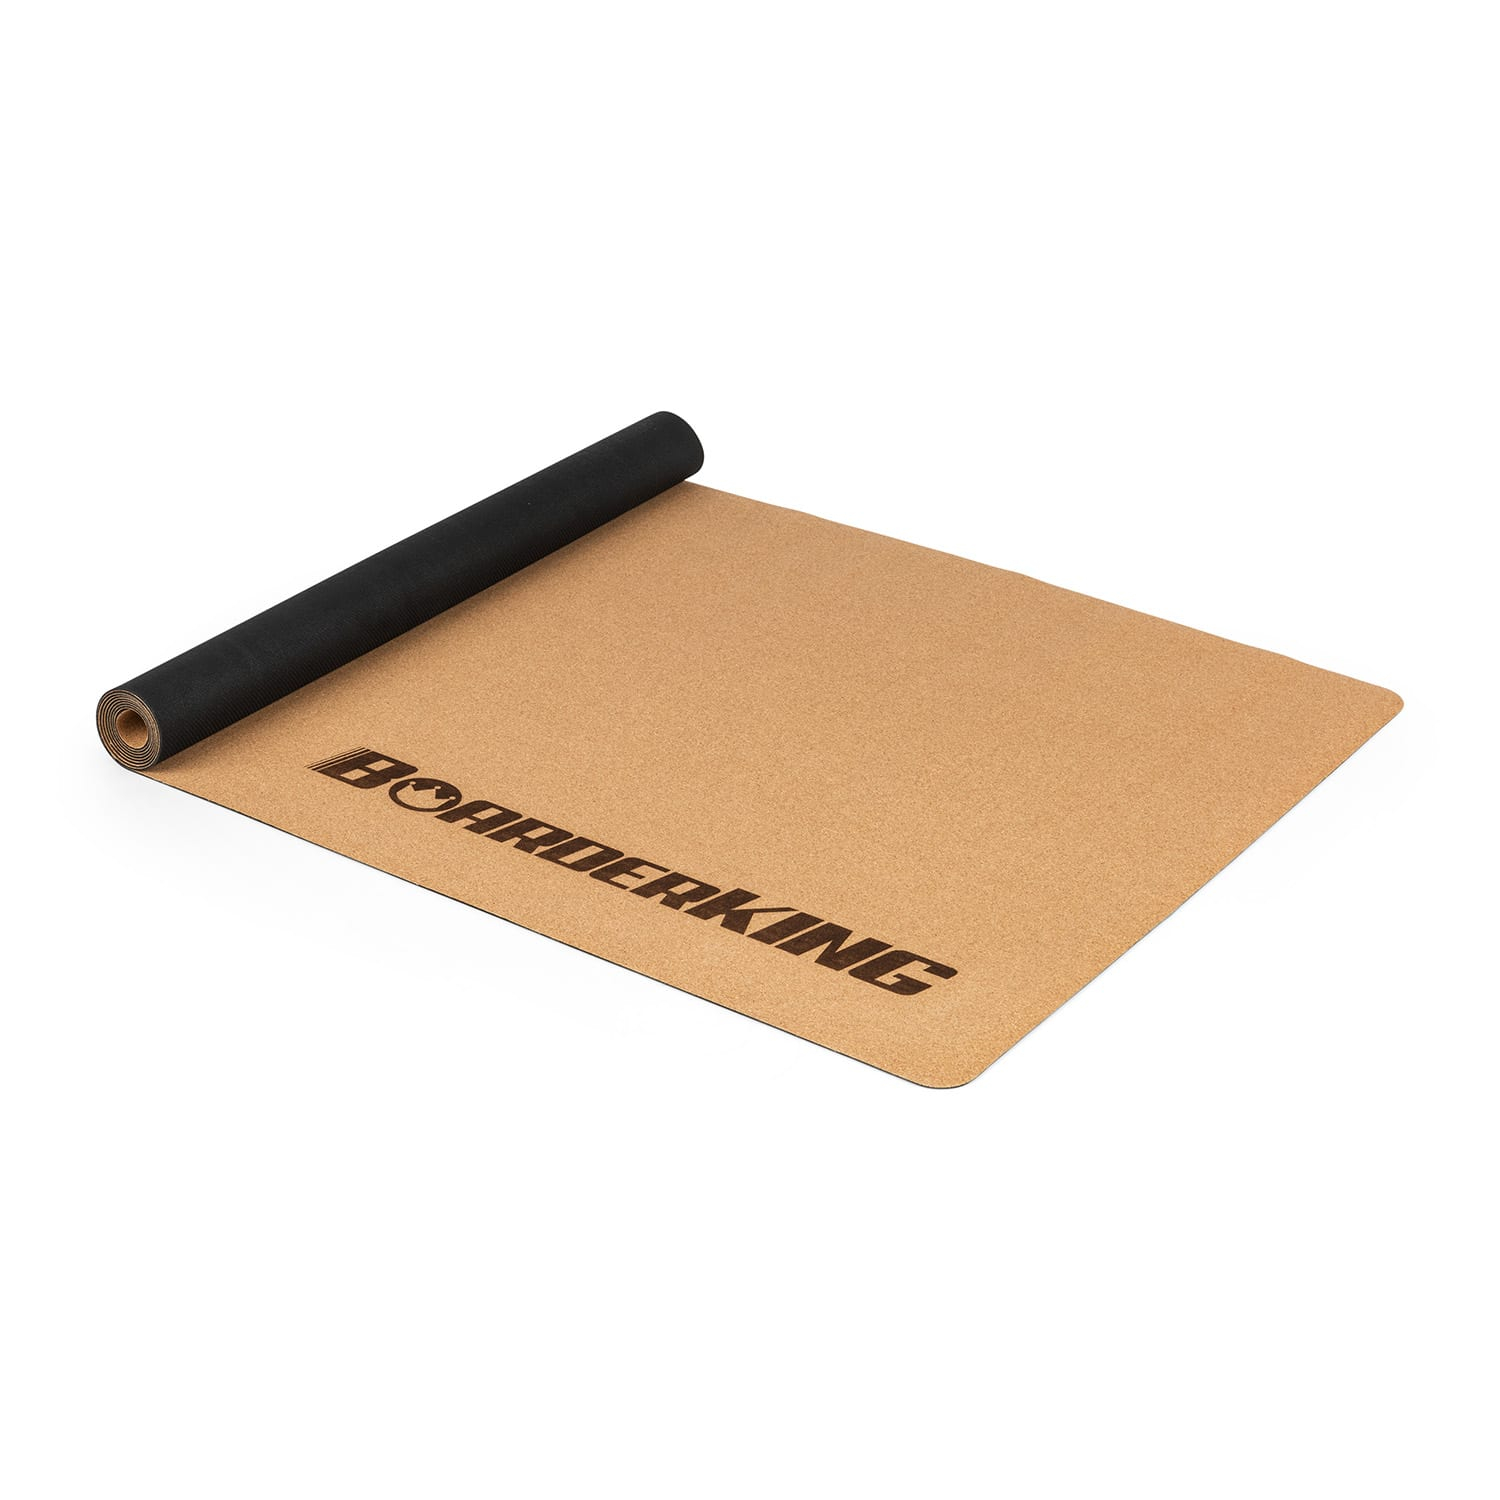 BoarderKING Cork mat for balance boards Indoorboard, floor protection mat, cork